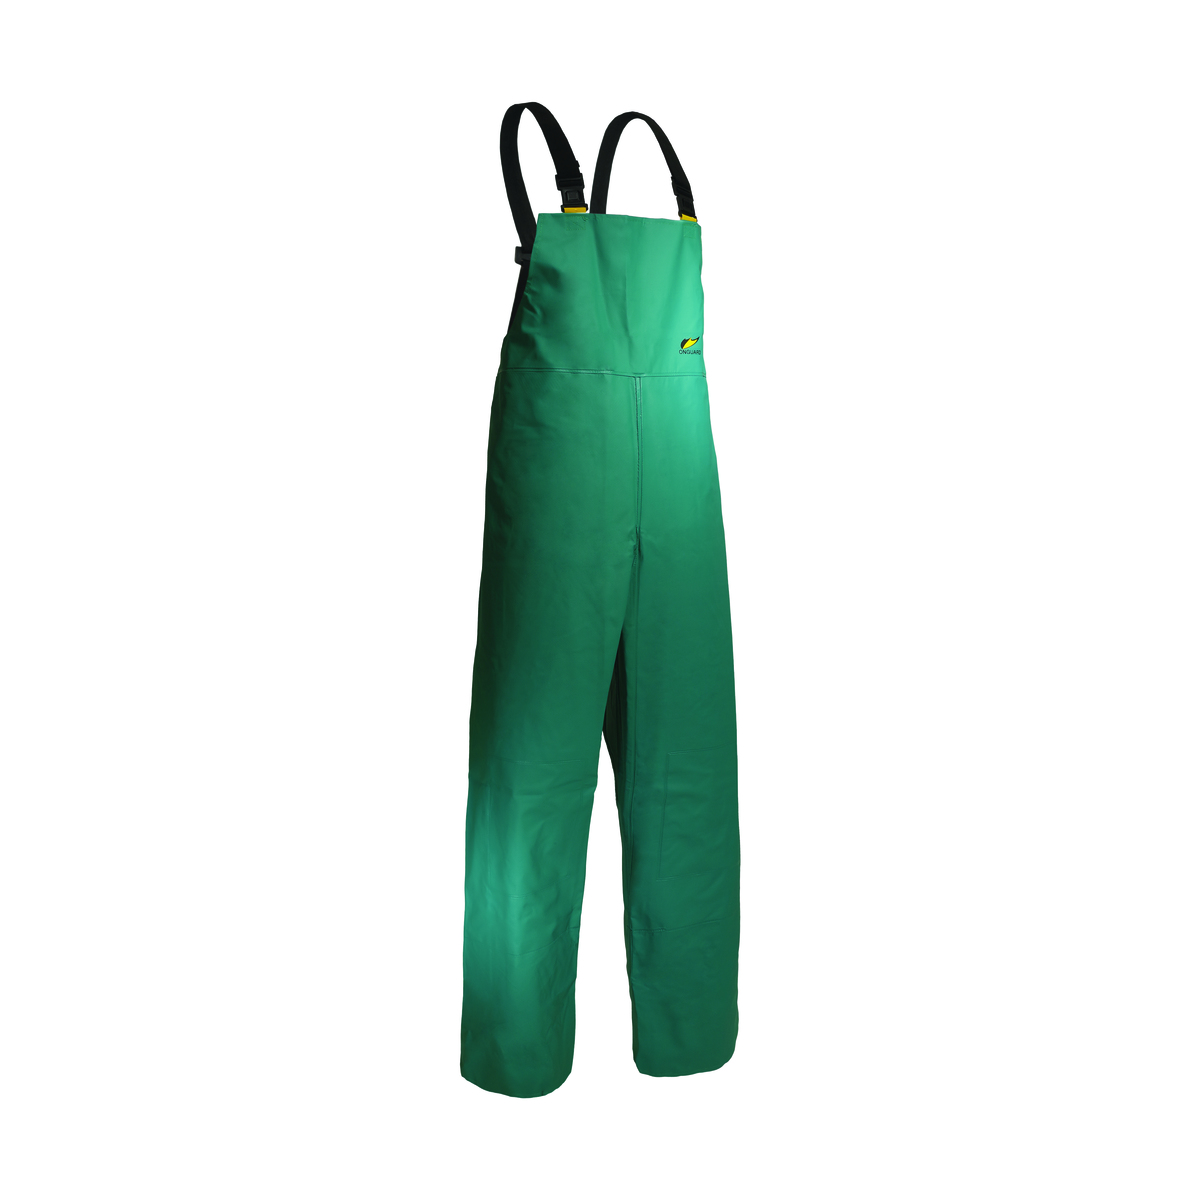 Dunlop® Protective Footwear Small Green Chemtex .42 mm Nylon/Polyester/PVC Bib Pants